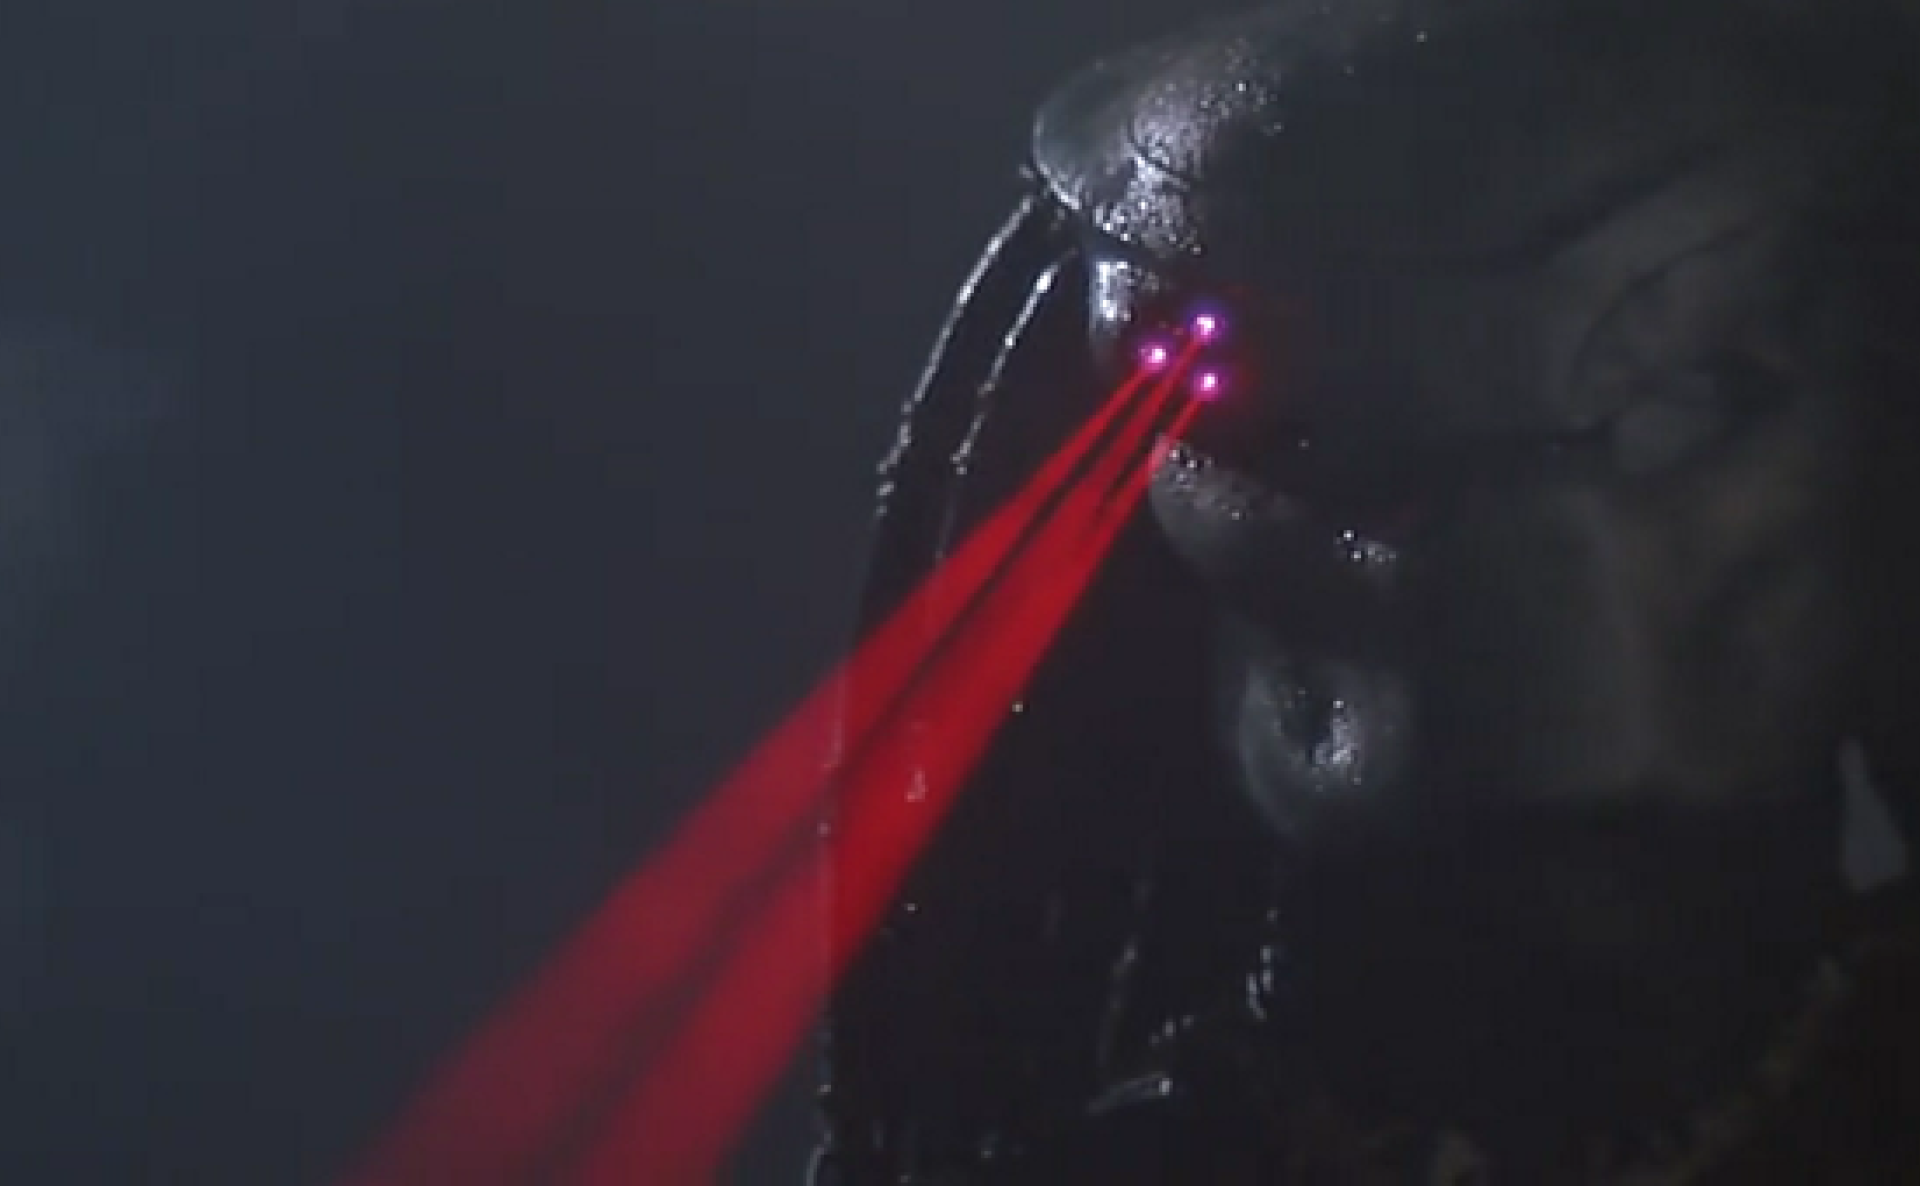 predator aiming tridot laser